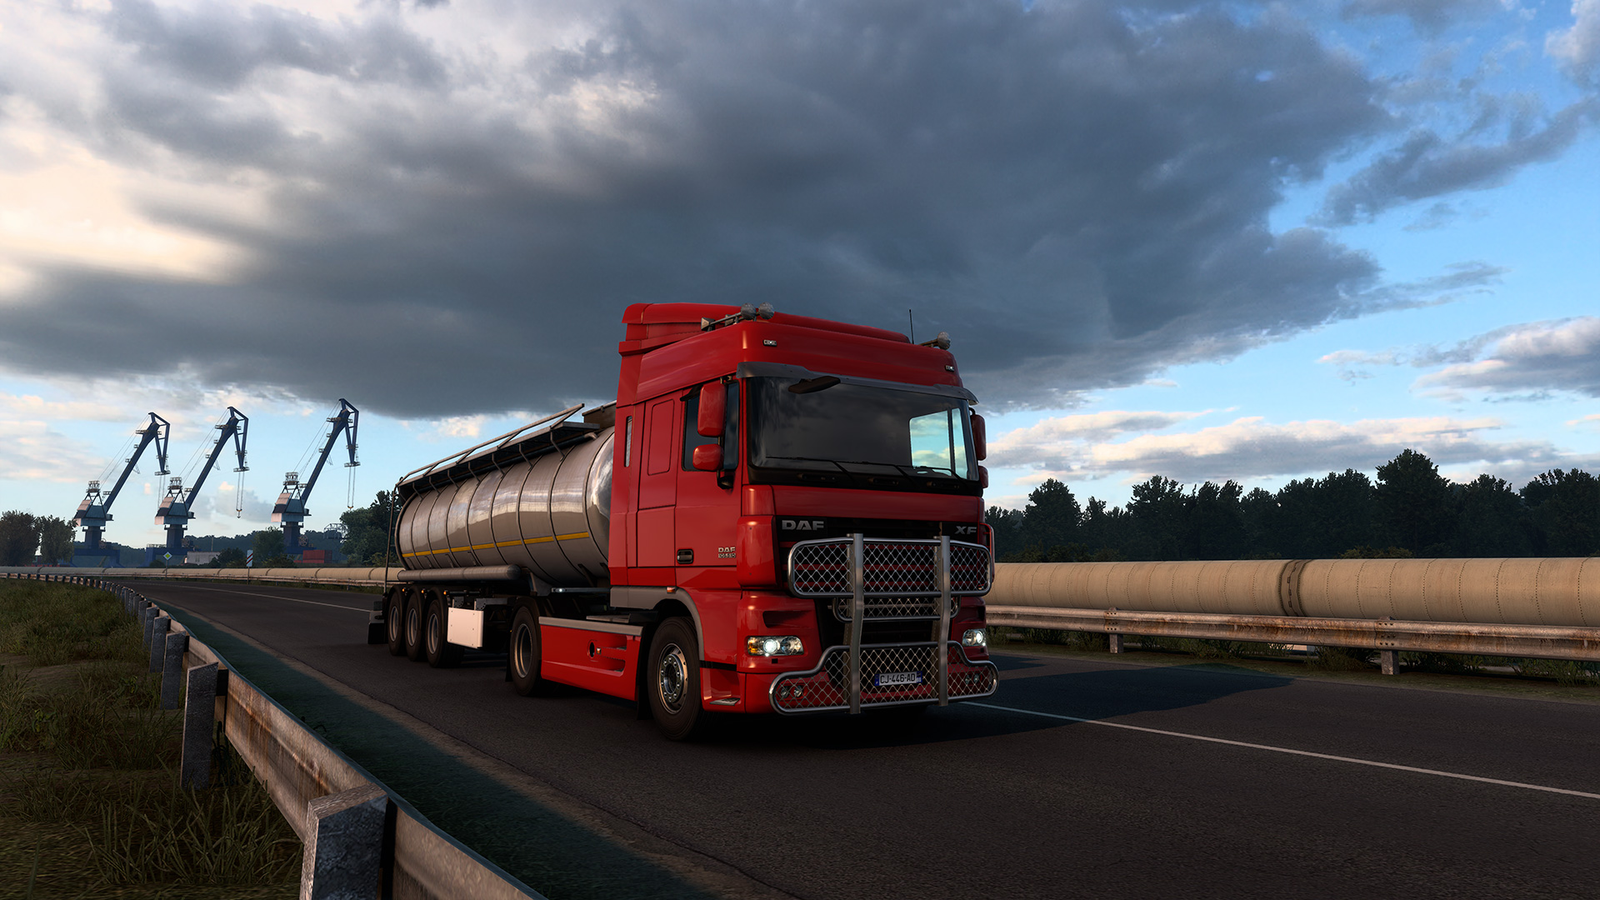 Euro Truck Simulator 2 now has fancier lighting and a fancier Germany